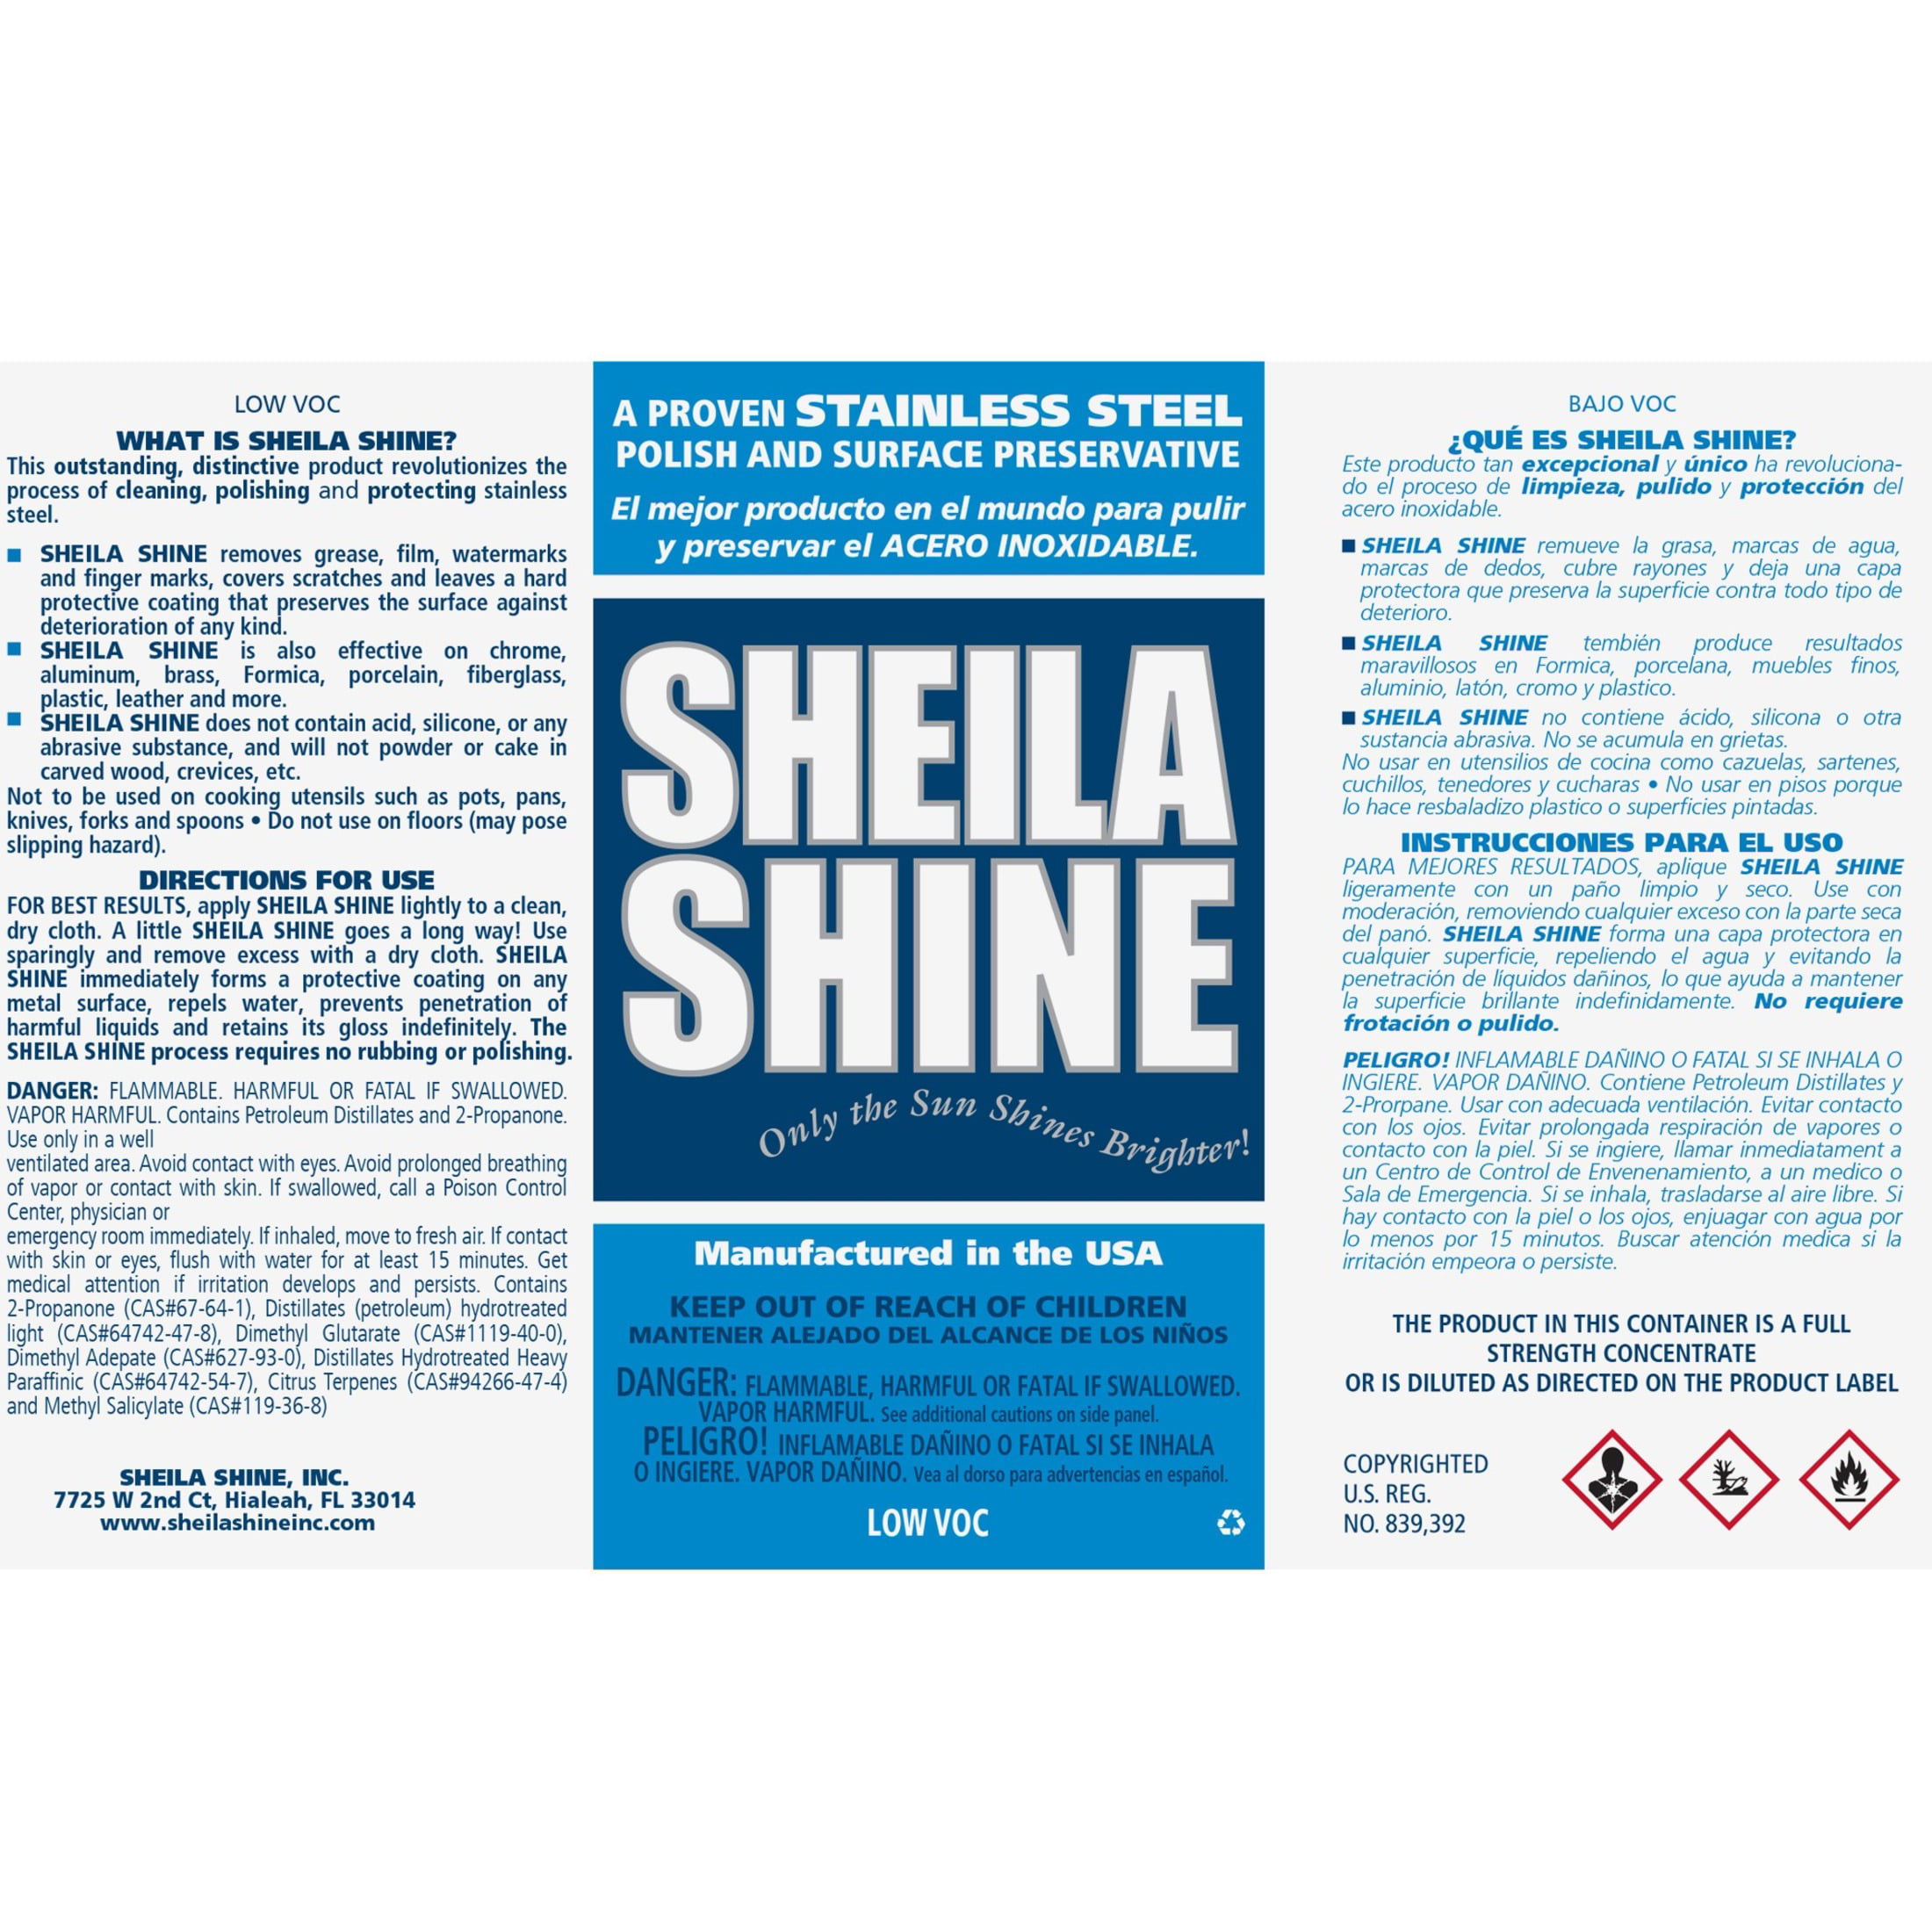 Shine It with Sheila Shine